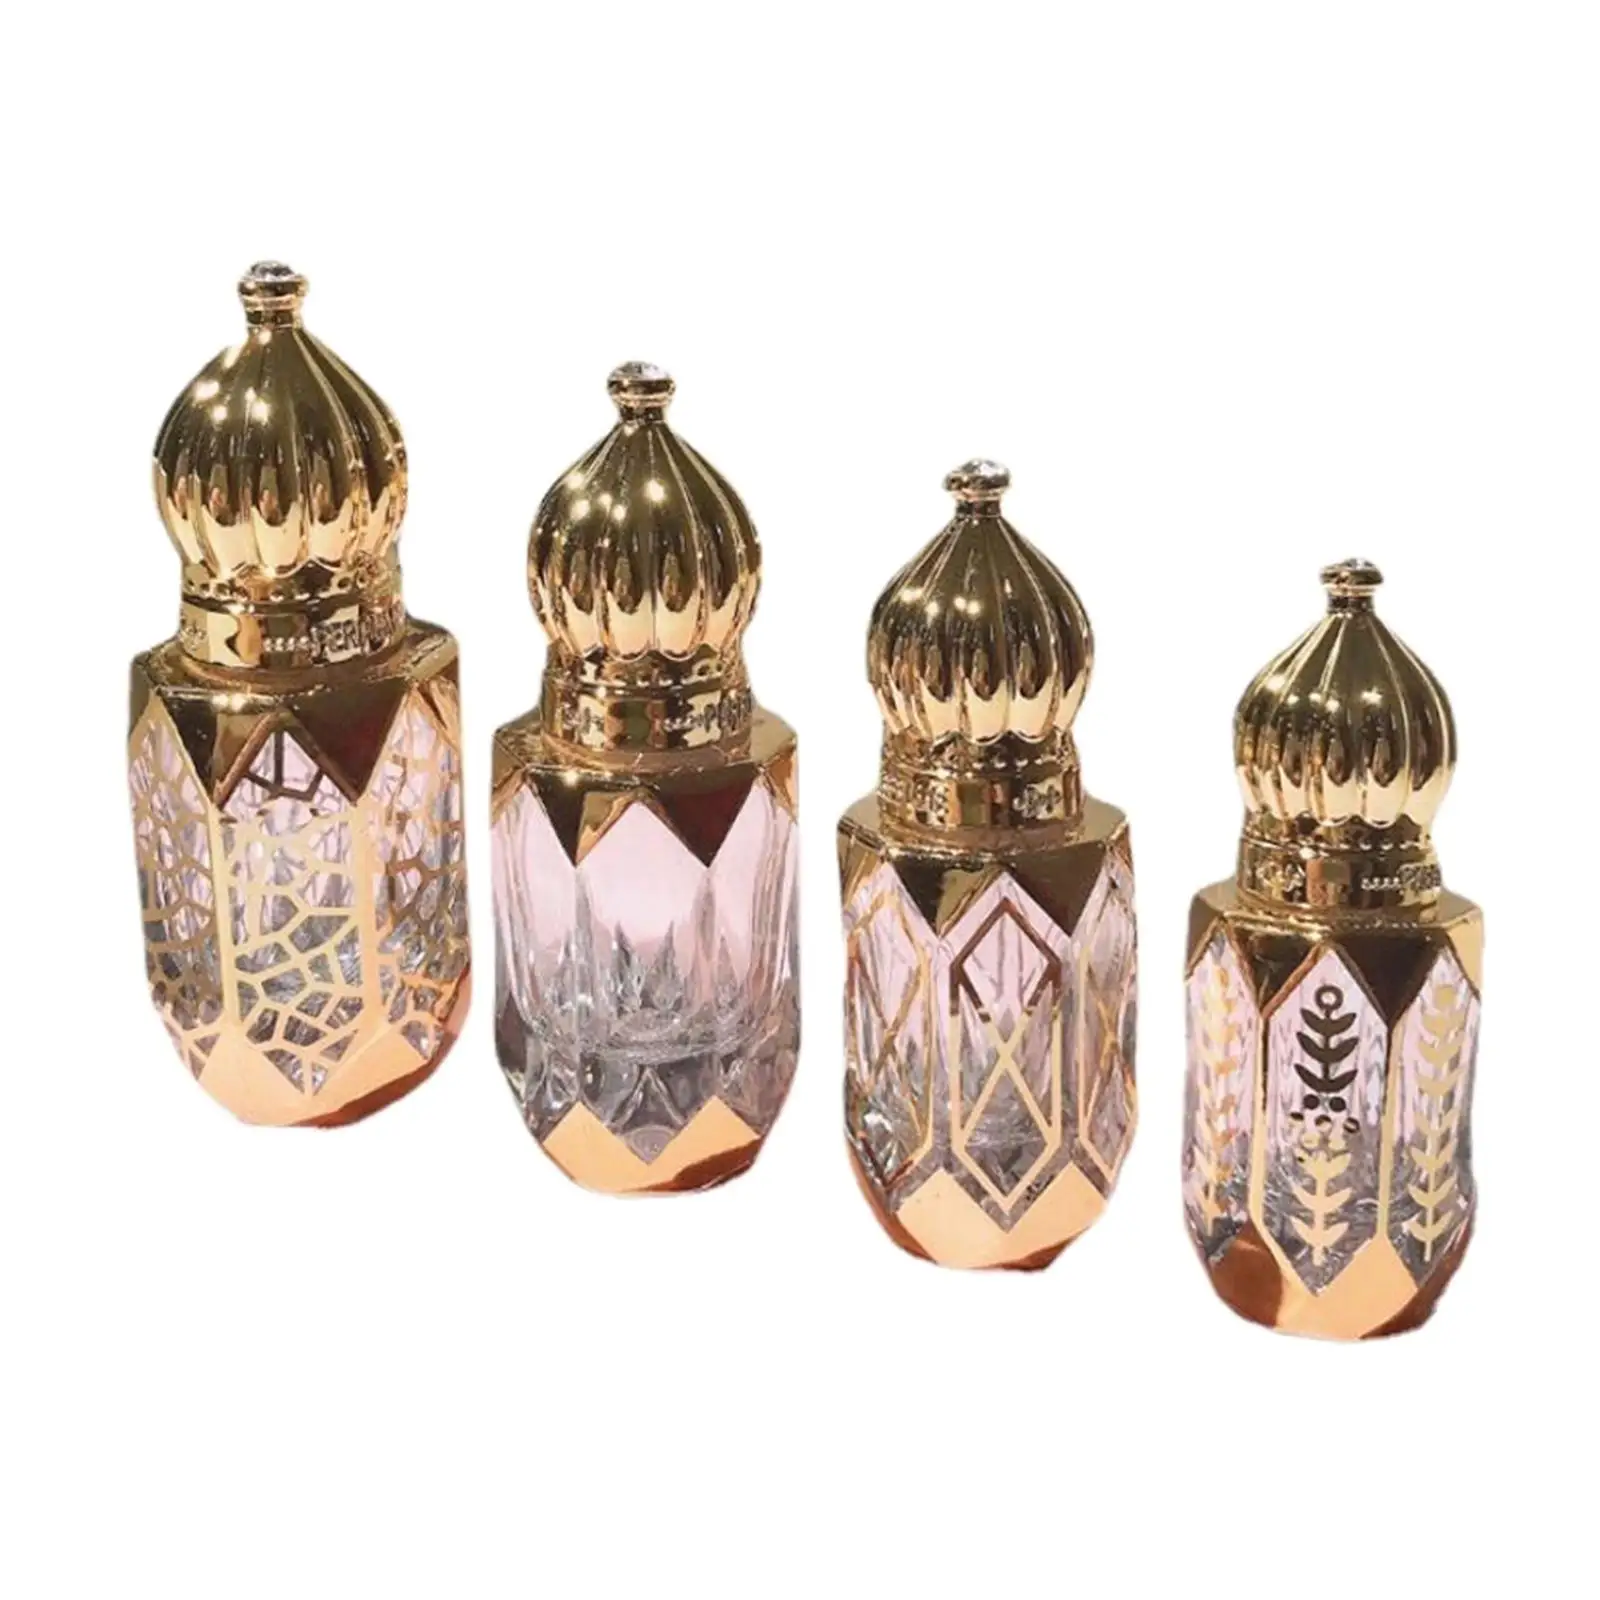 4x  Bottles/ Golden Arabic Portable Refillable Roller Ball Glass Luxury Empty Roller Bottles Container/ for Travel